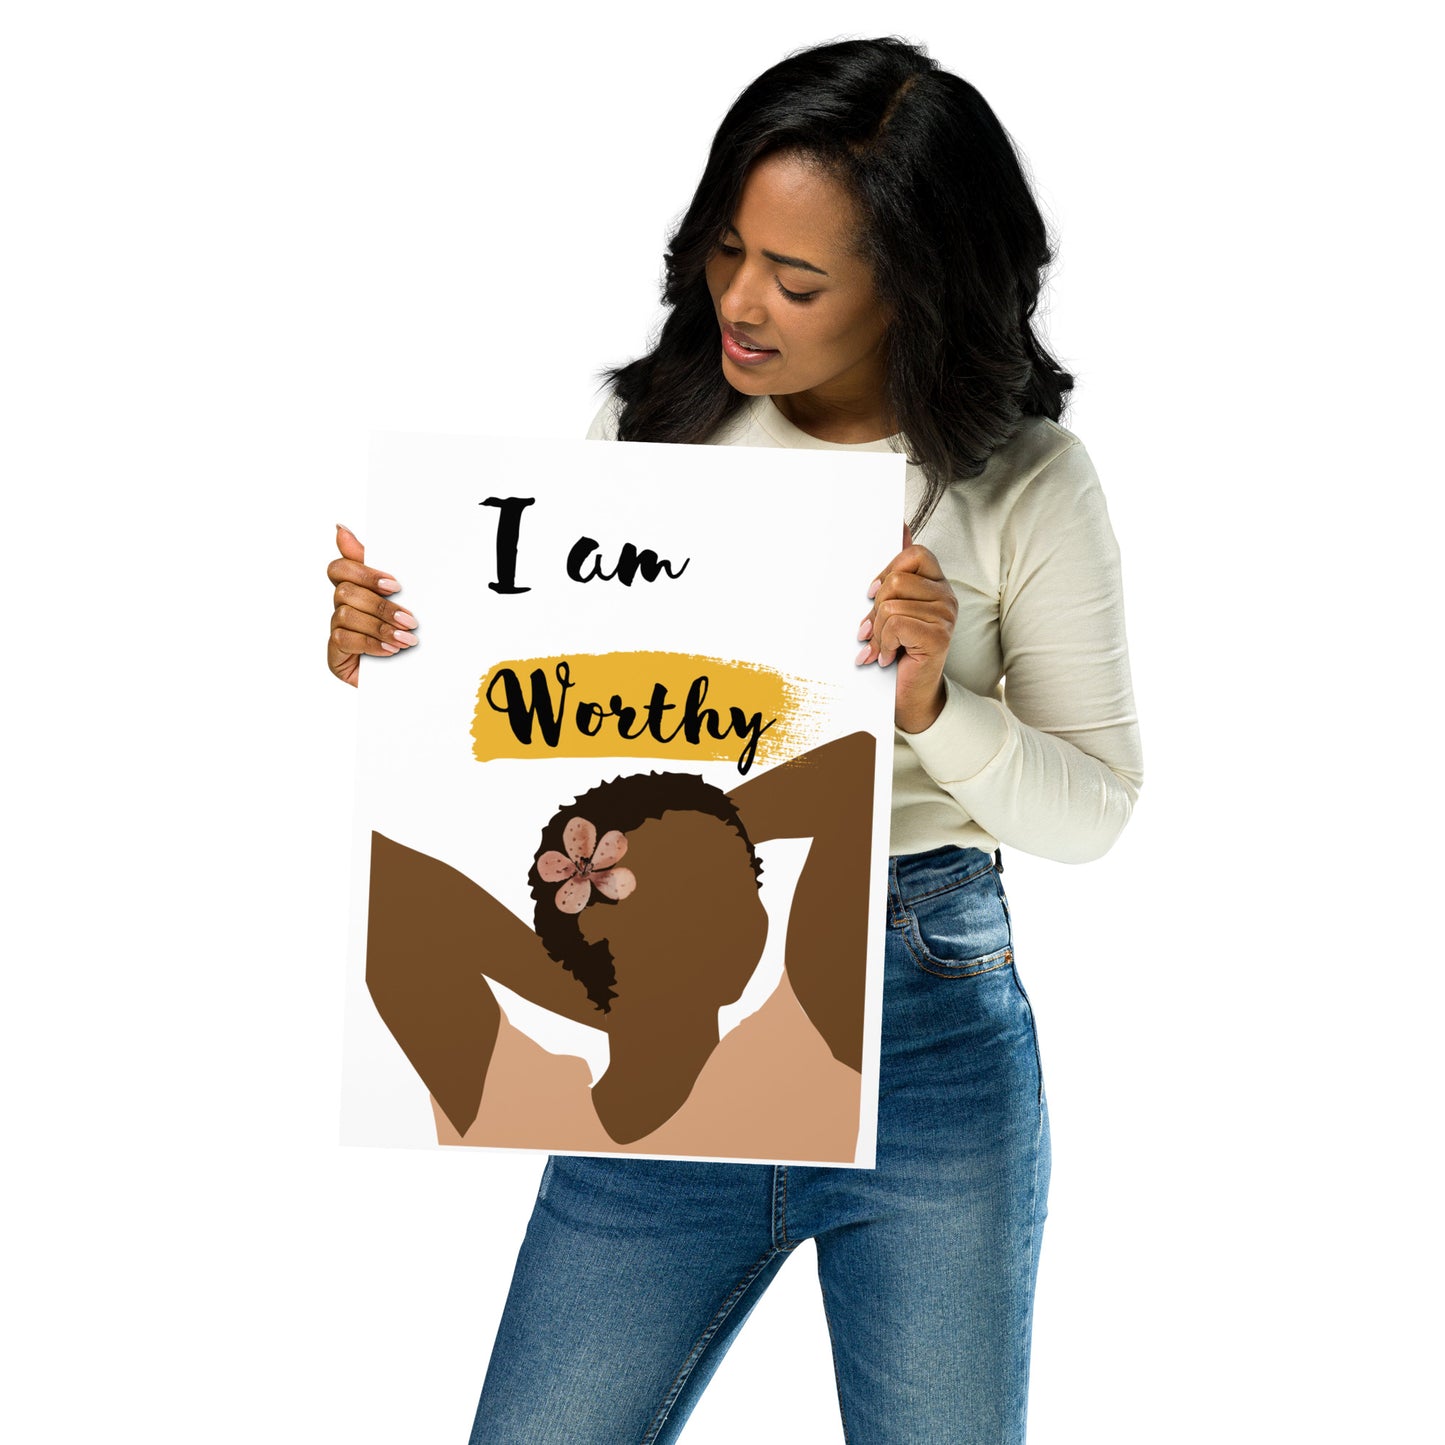 I am Worthy Poster